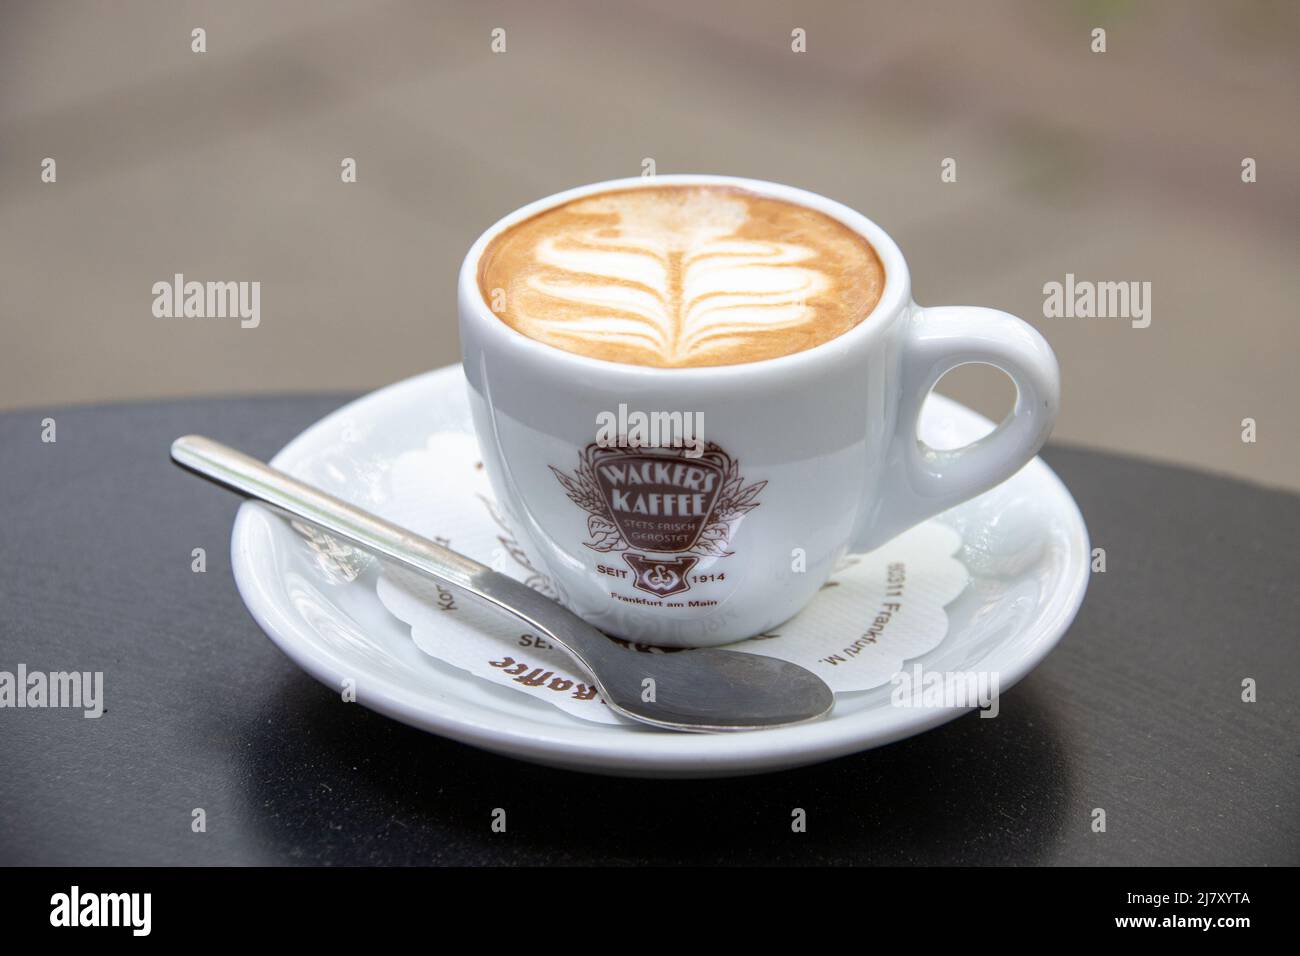 Macchina espresso al Wackers Kaffee, Francoforte, Germania Foto Stock